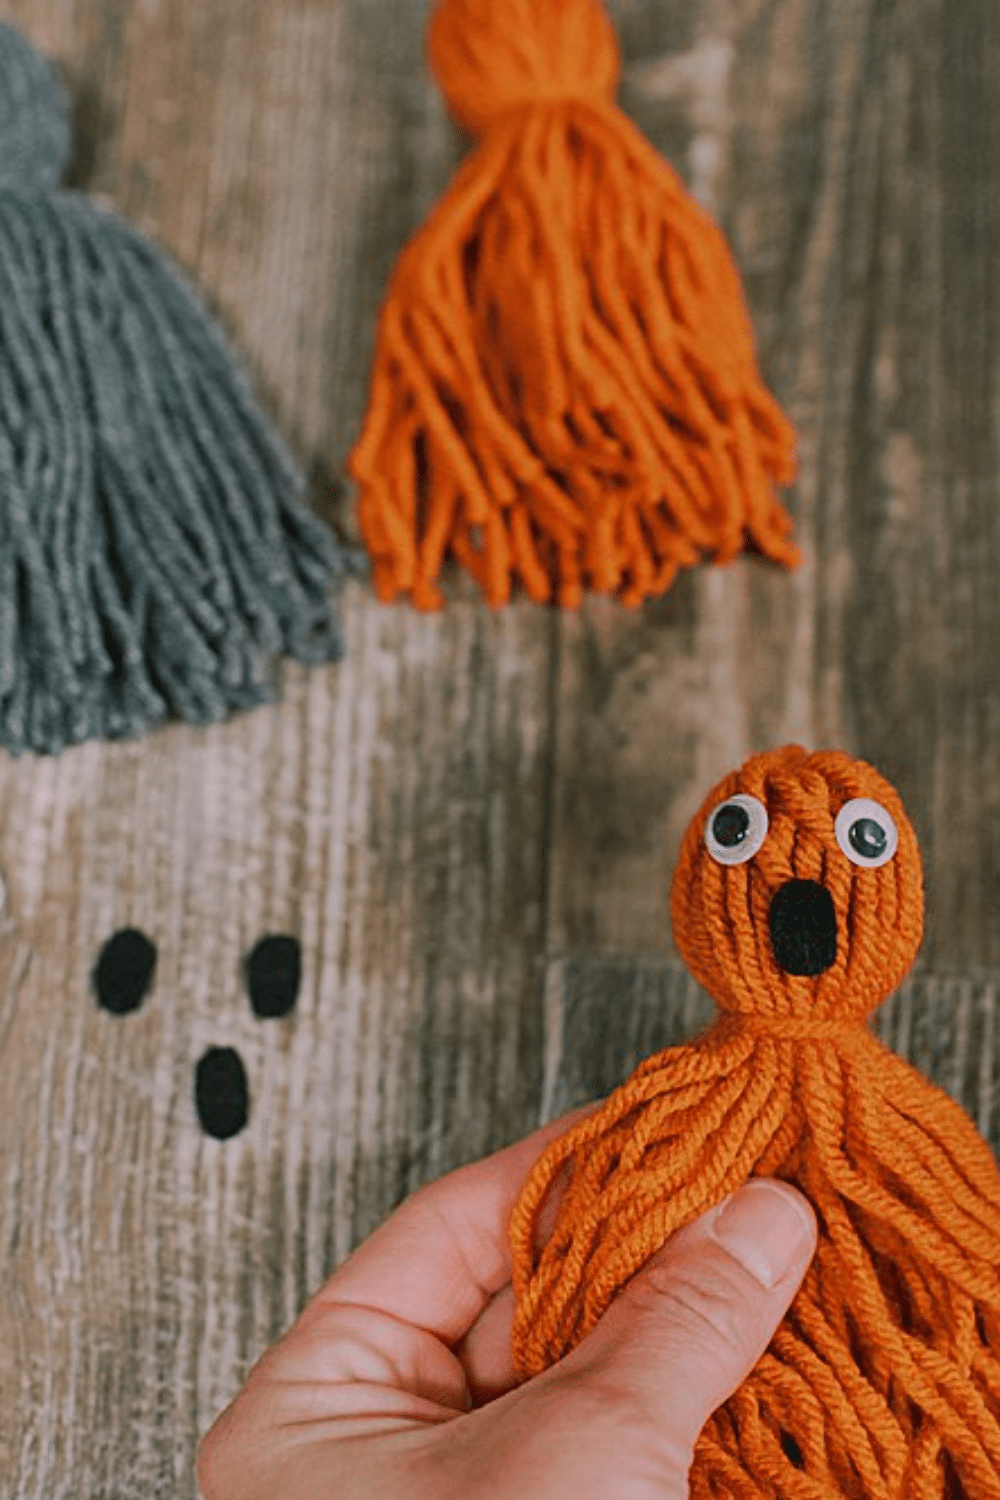 How to Make Yarn Tassel Ghosts for Halloween